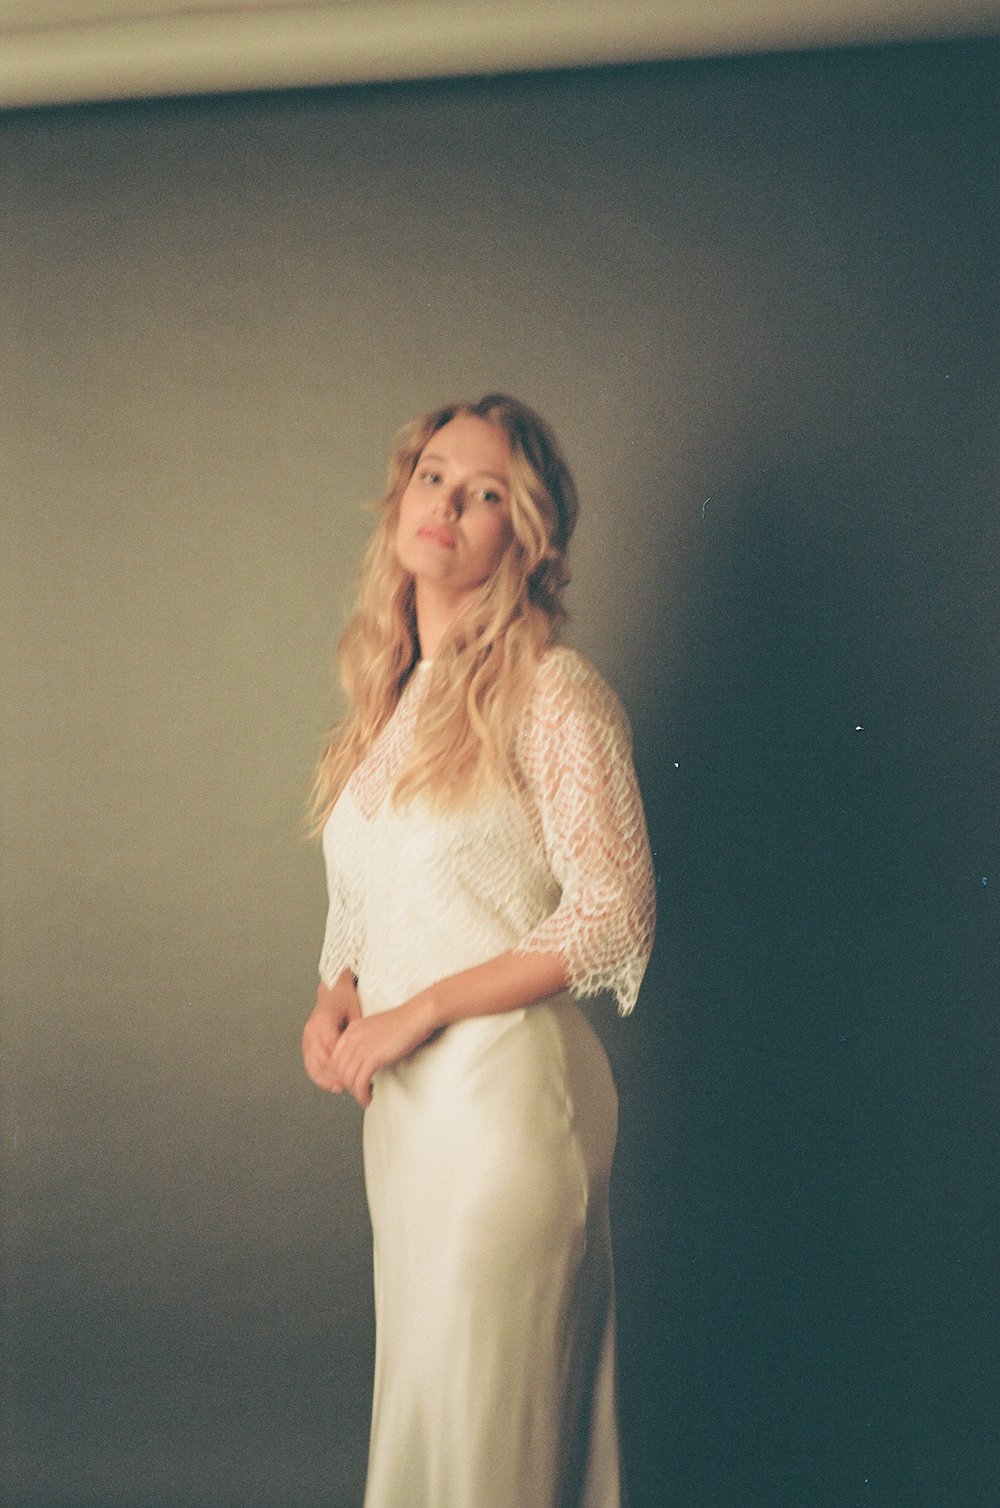 Analogue-shoot-Hollie-Cornish-photographer-Kate-Beaumont-wedding-gowns-Sheffield-28.jpg